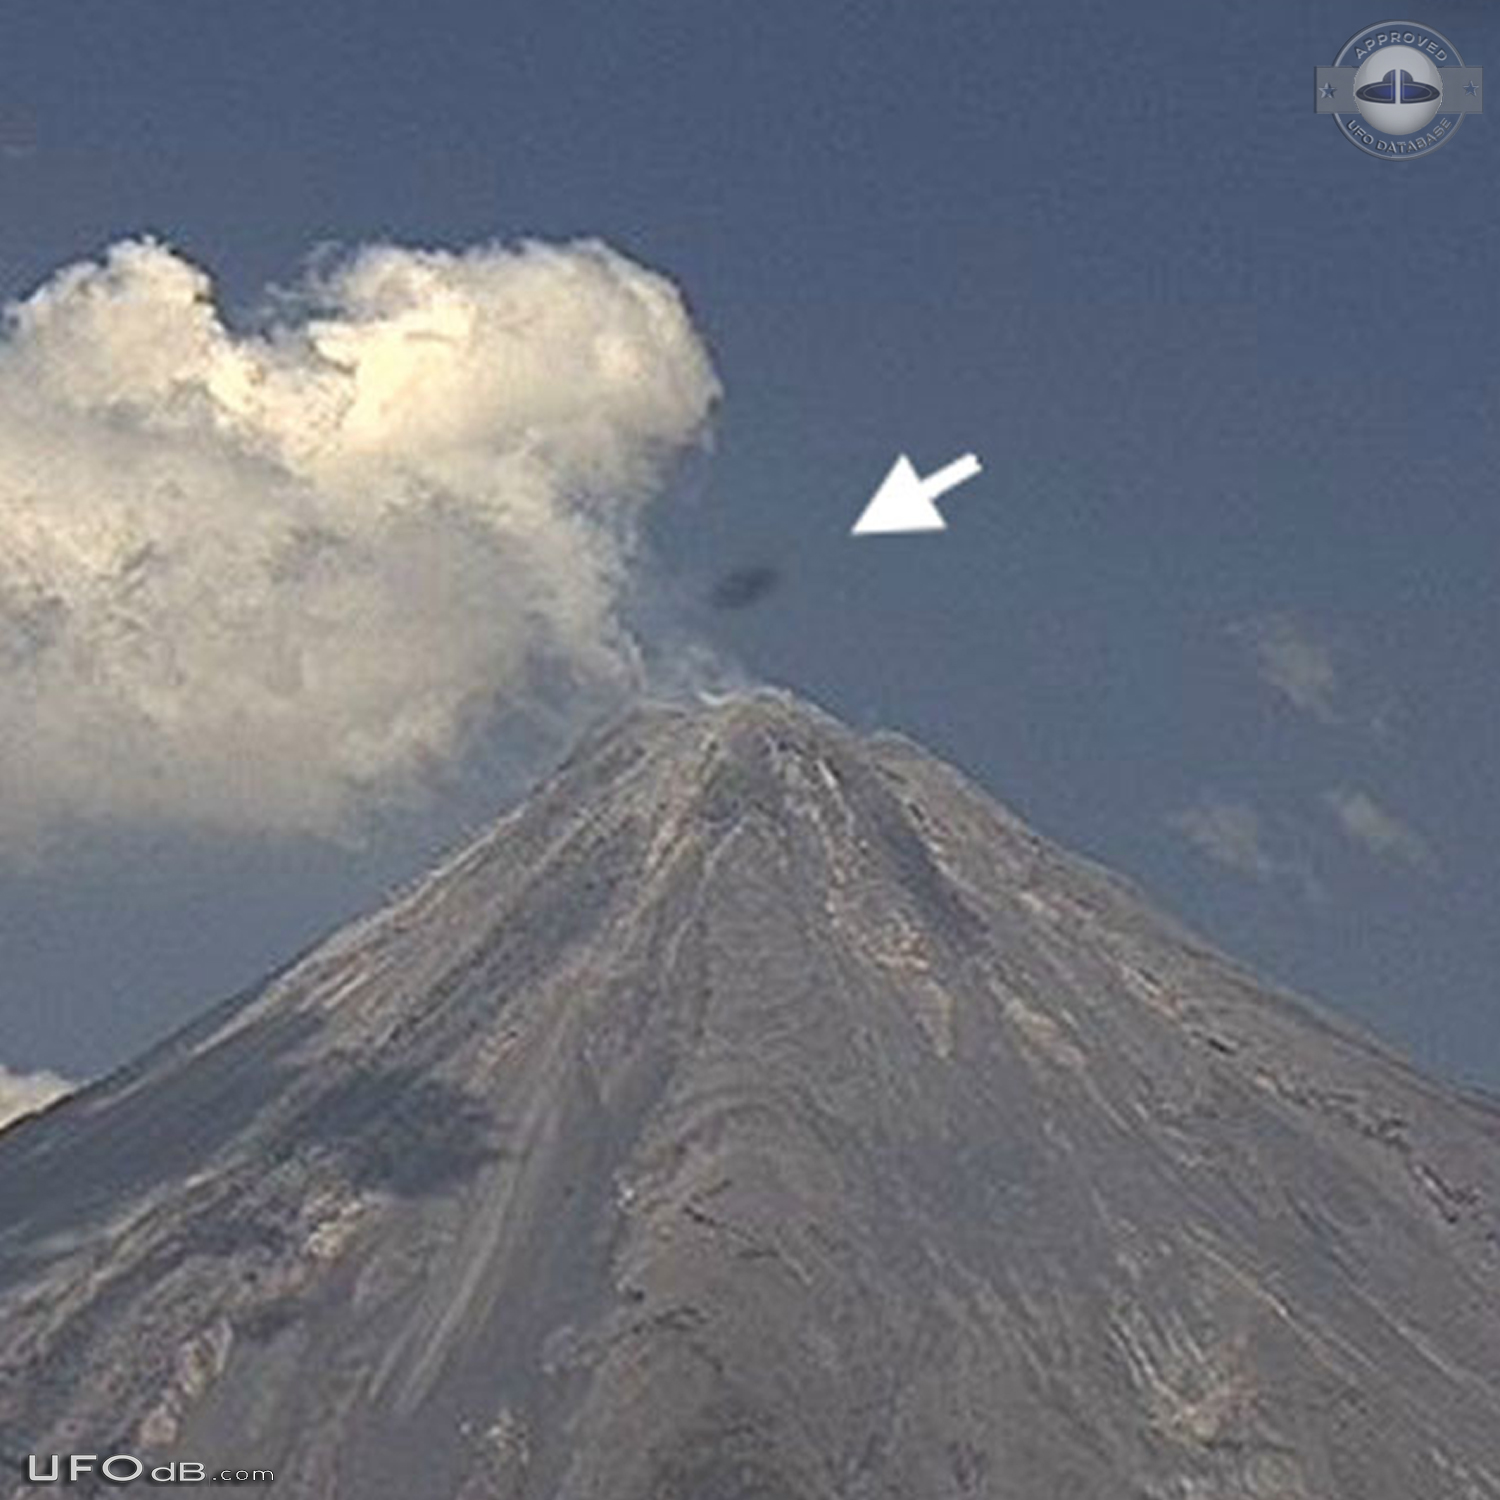 UFO caught on Volcan de Colima Webcam in Mexico - March 2015 UFO Picture #665-6